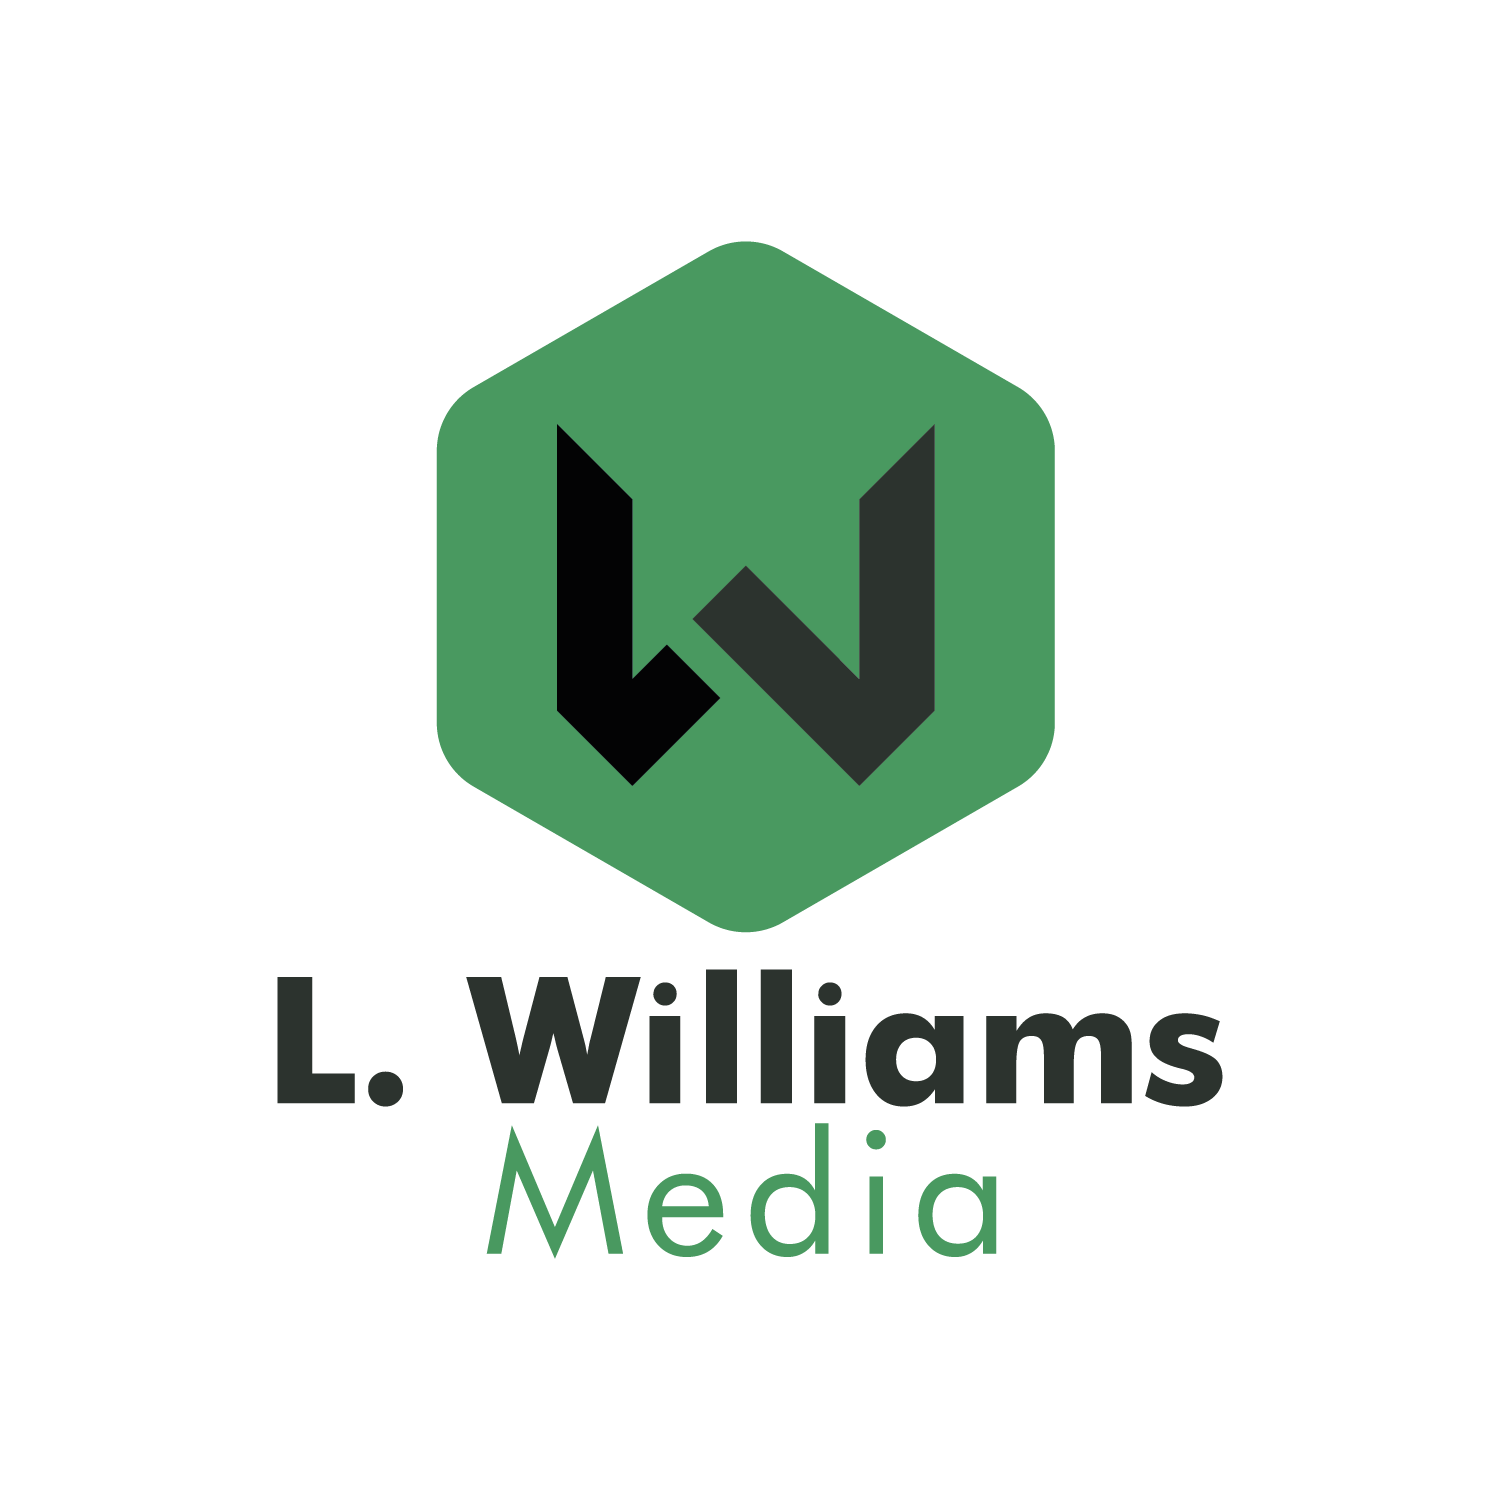 L. Williams Media